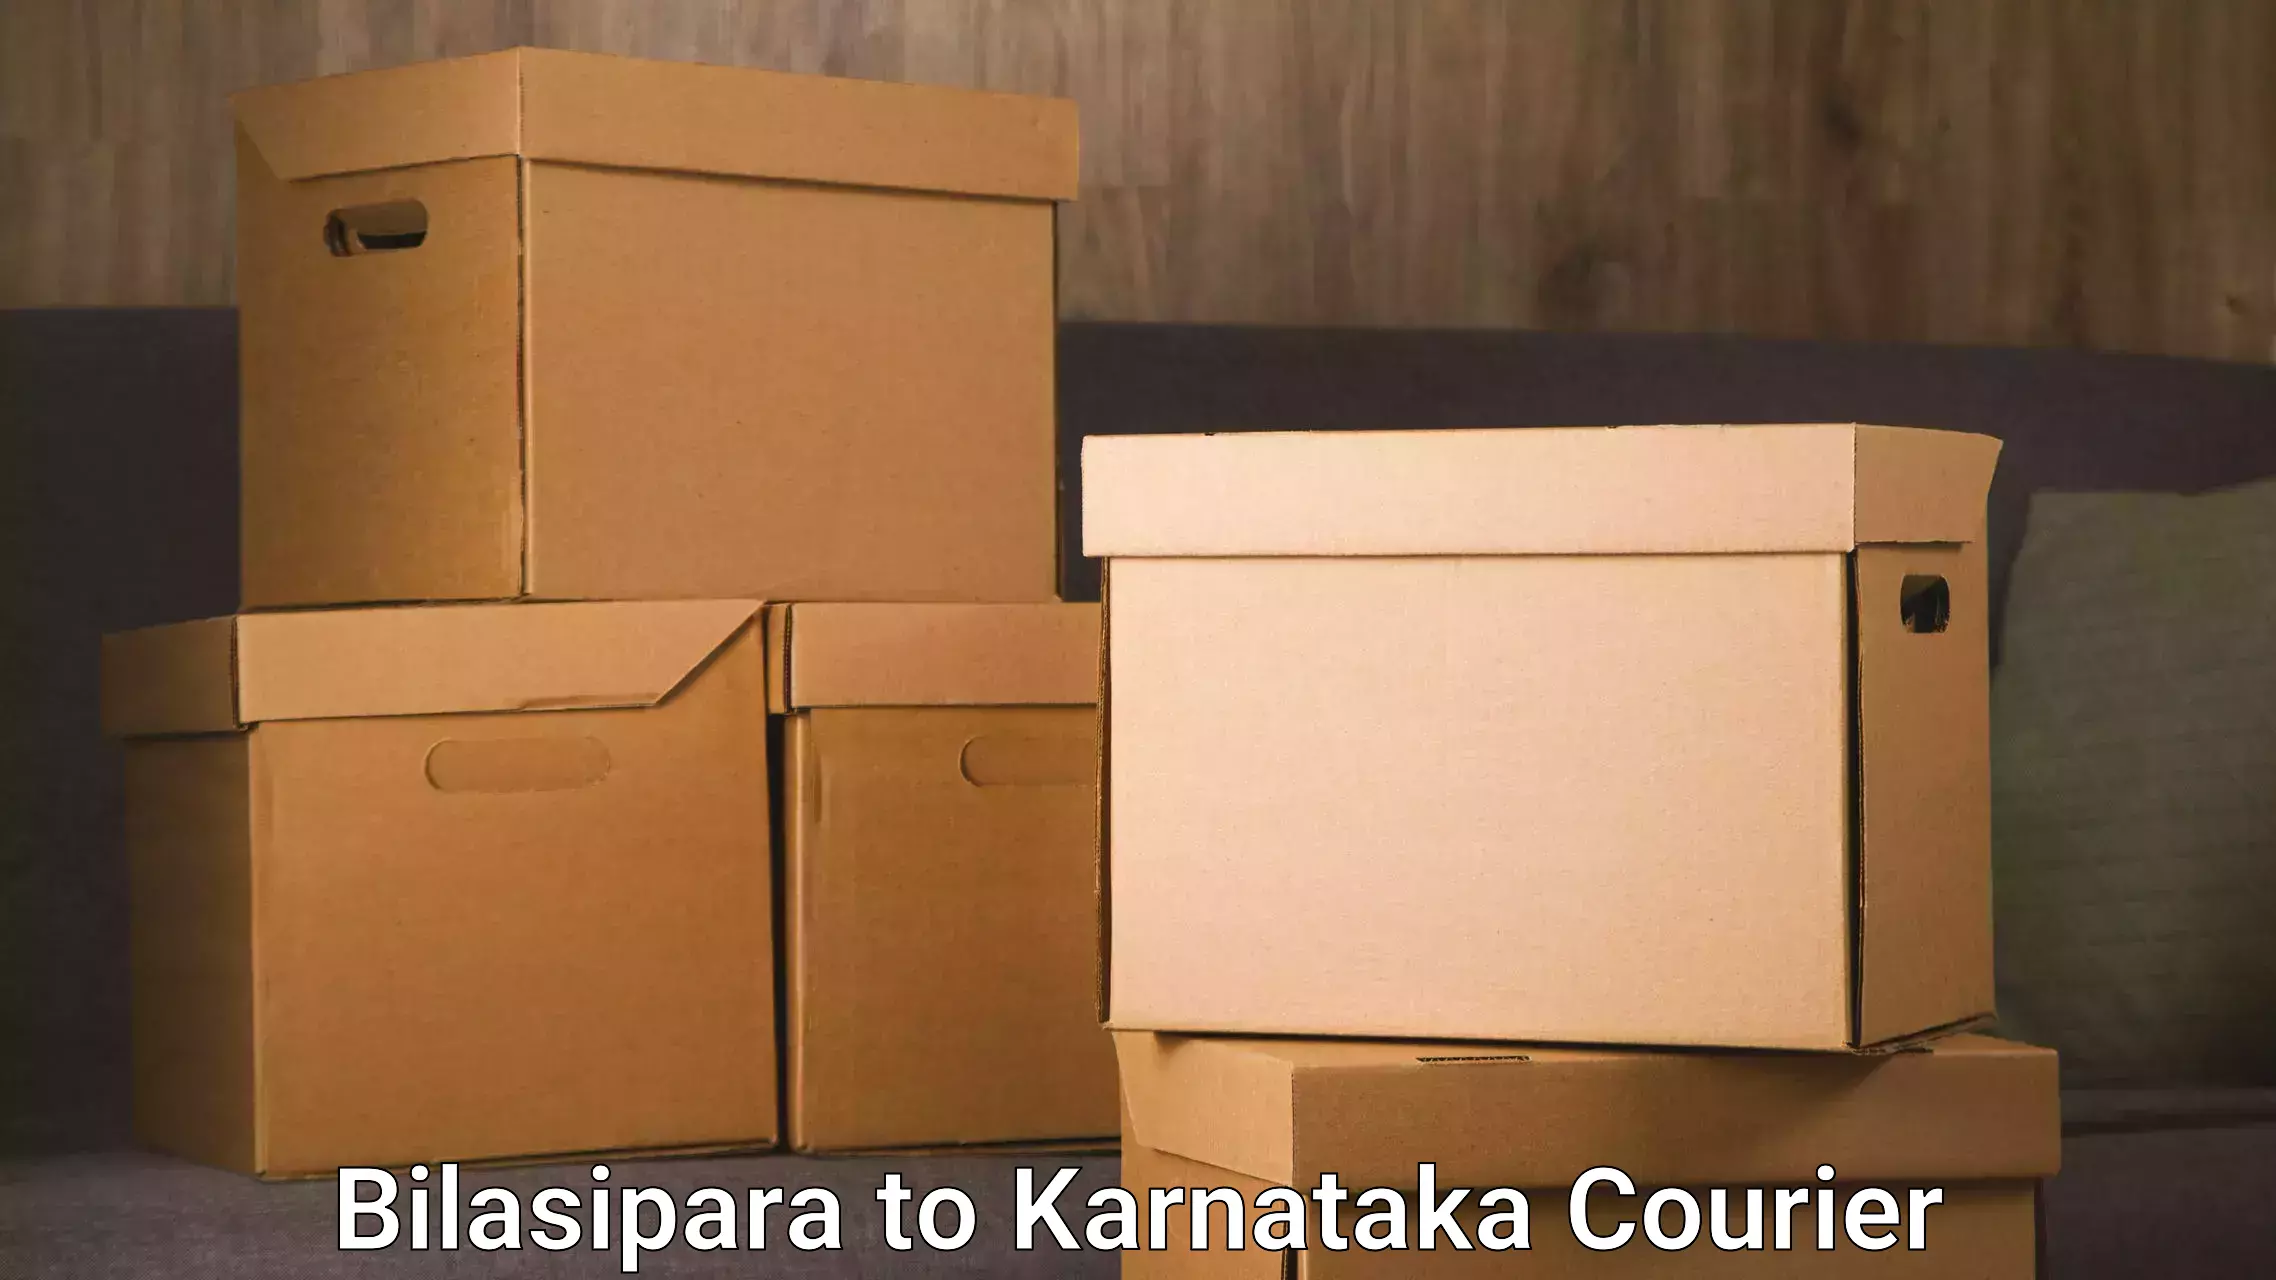 Reliable courier service Bilasipara to Bengaluru